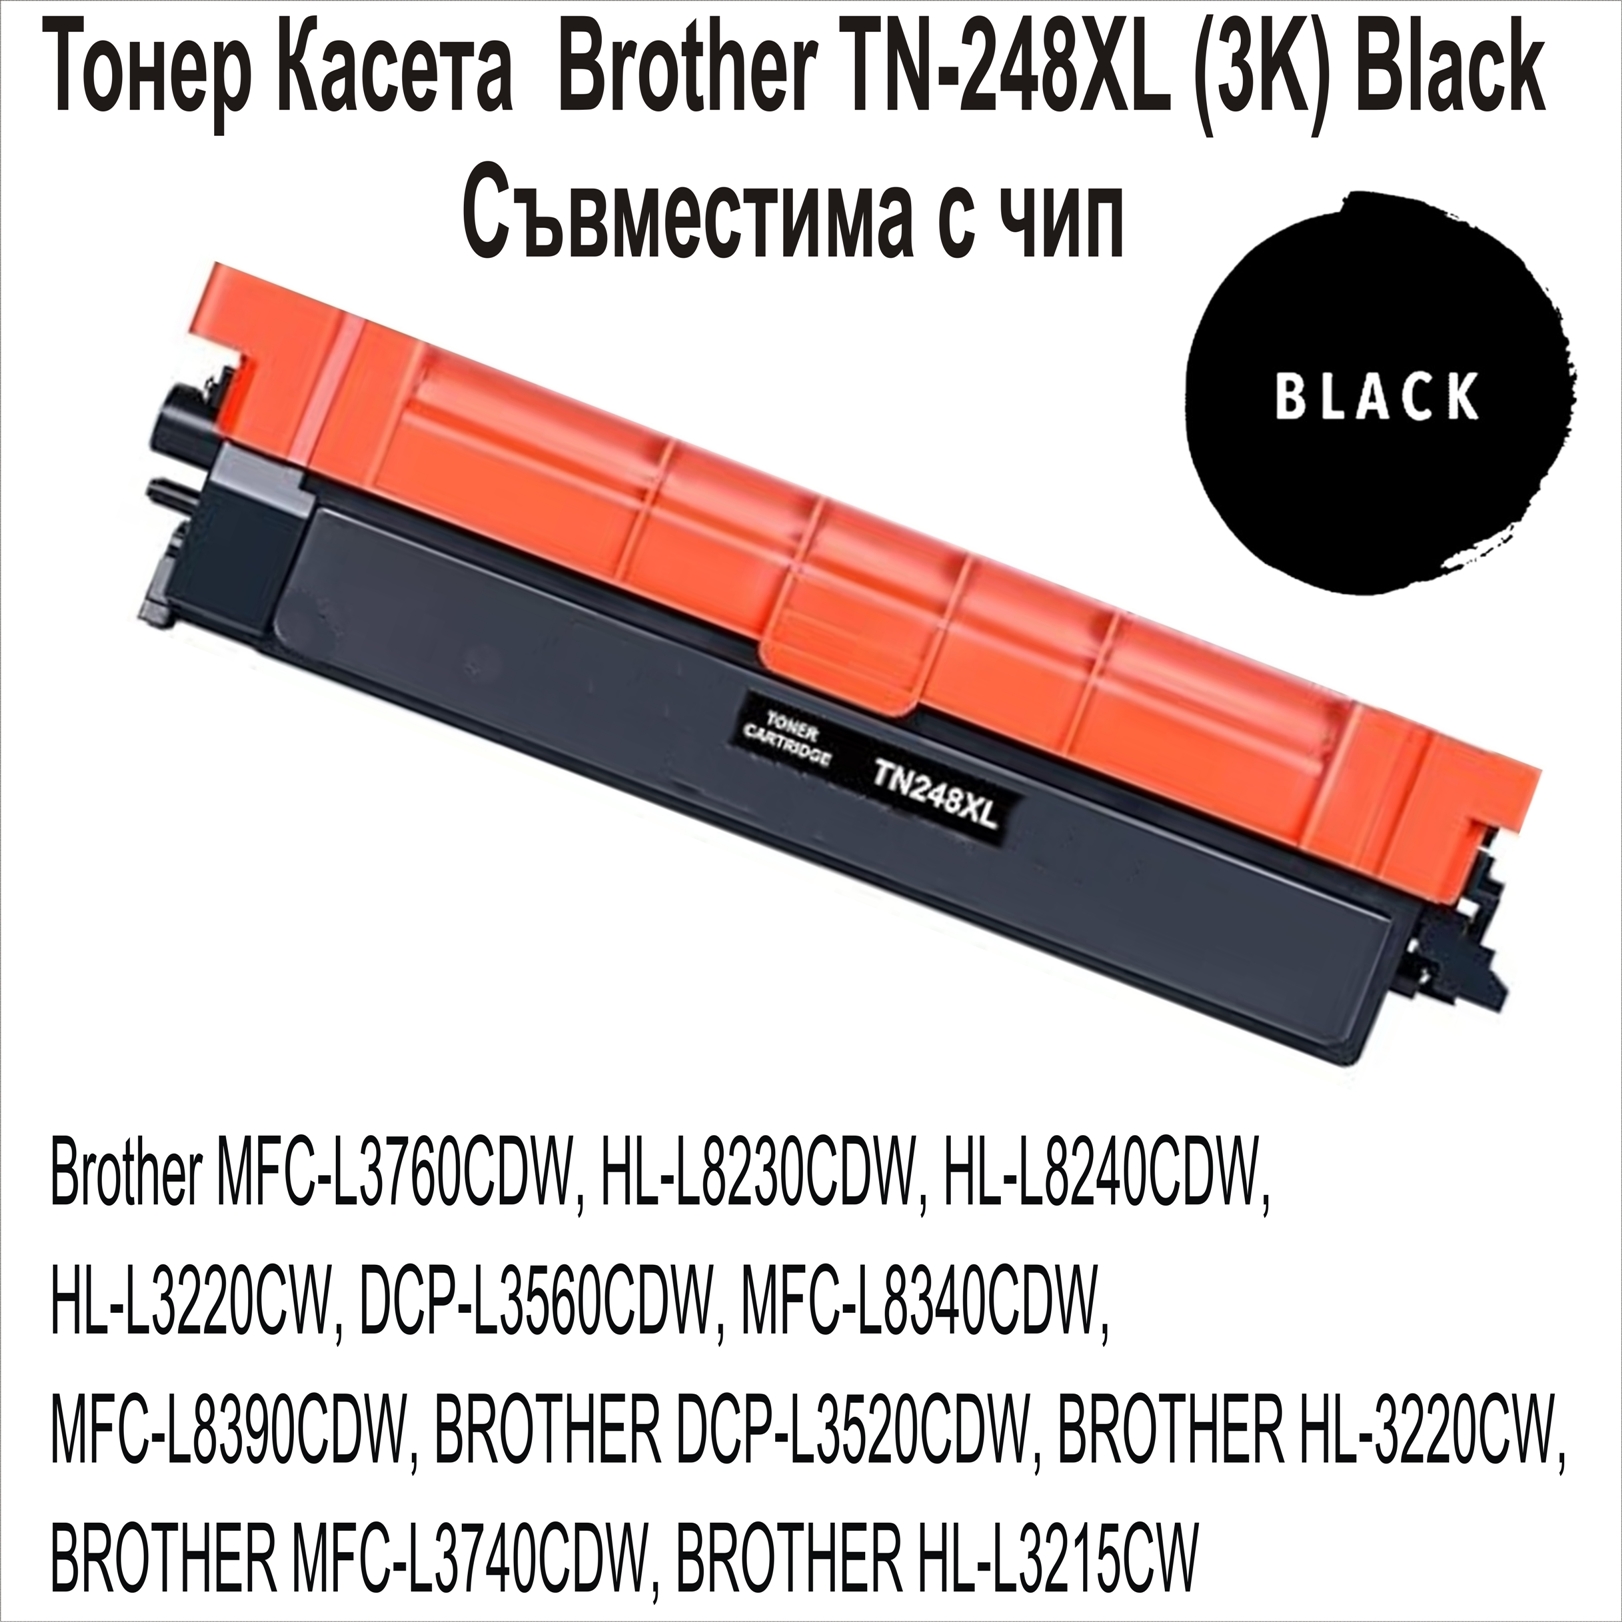 Brother TN-248XL (3.0K) Black Compatible